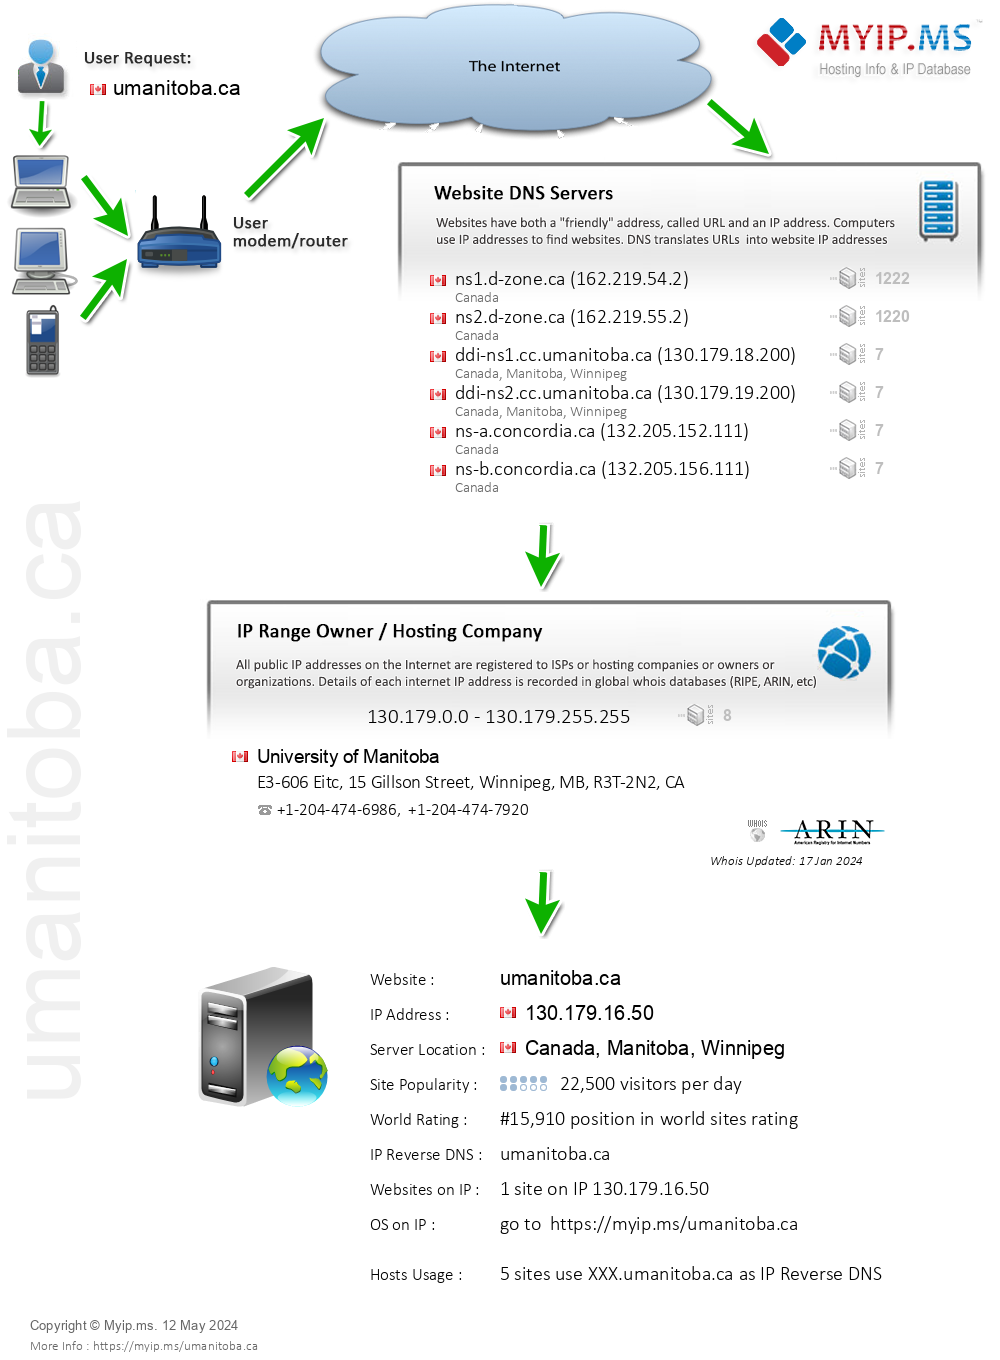 Umanitoba.ca - Website Hosting Visual IP Diagram